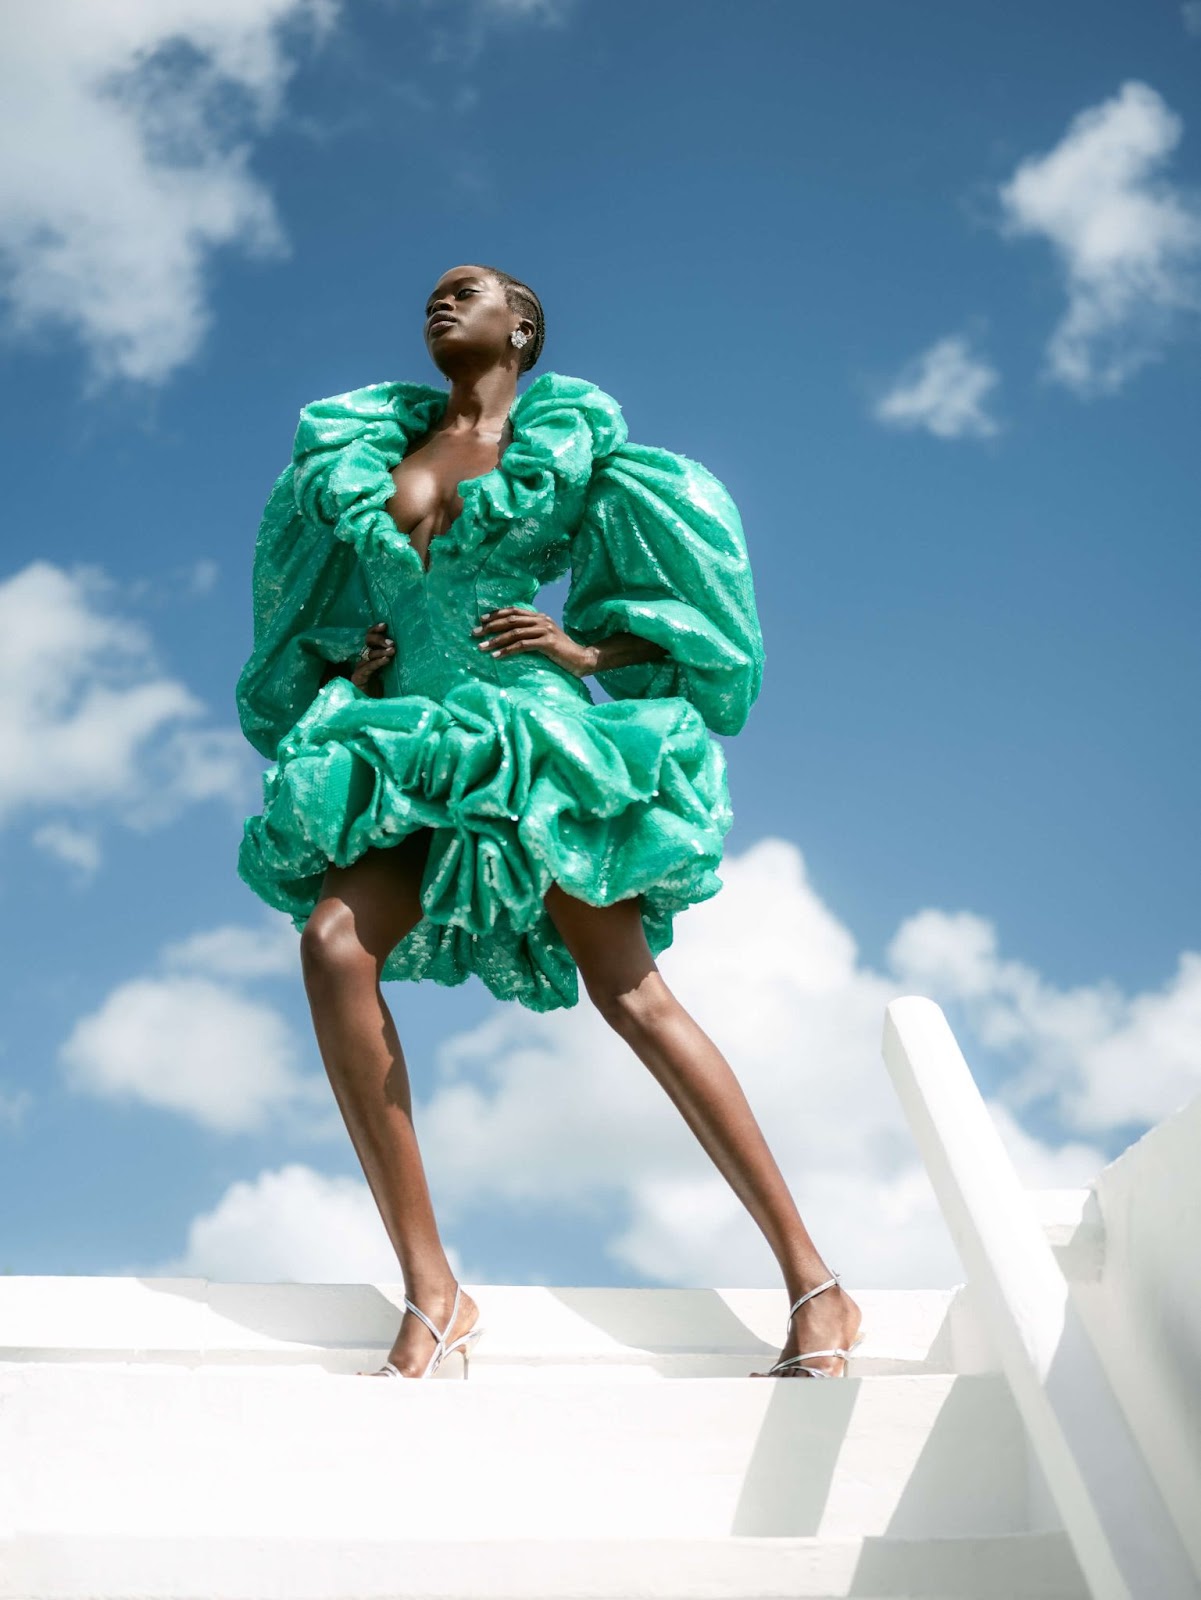 colorful Balmain couture worn at editorial photo shoot